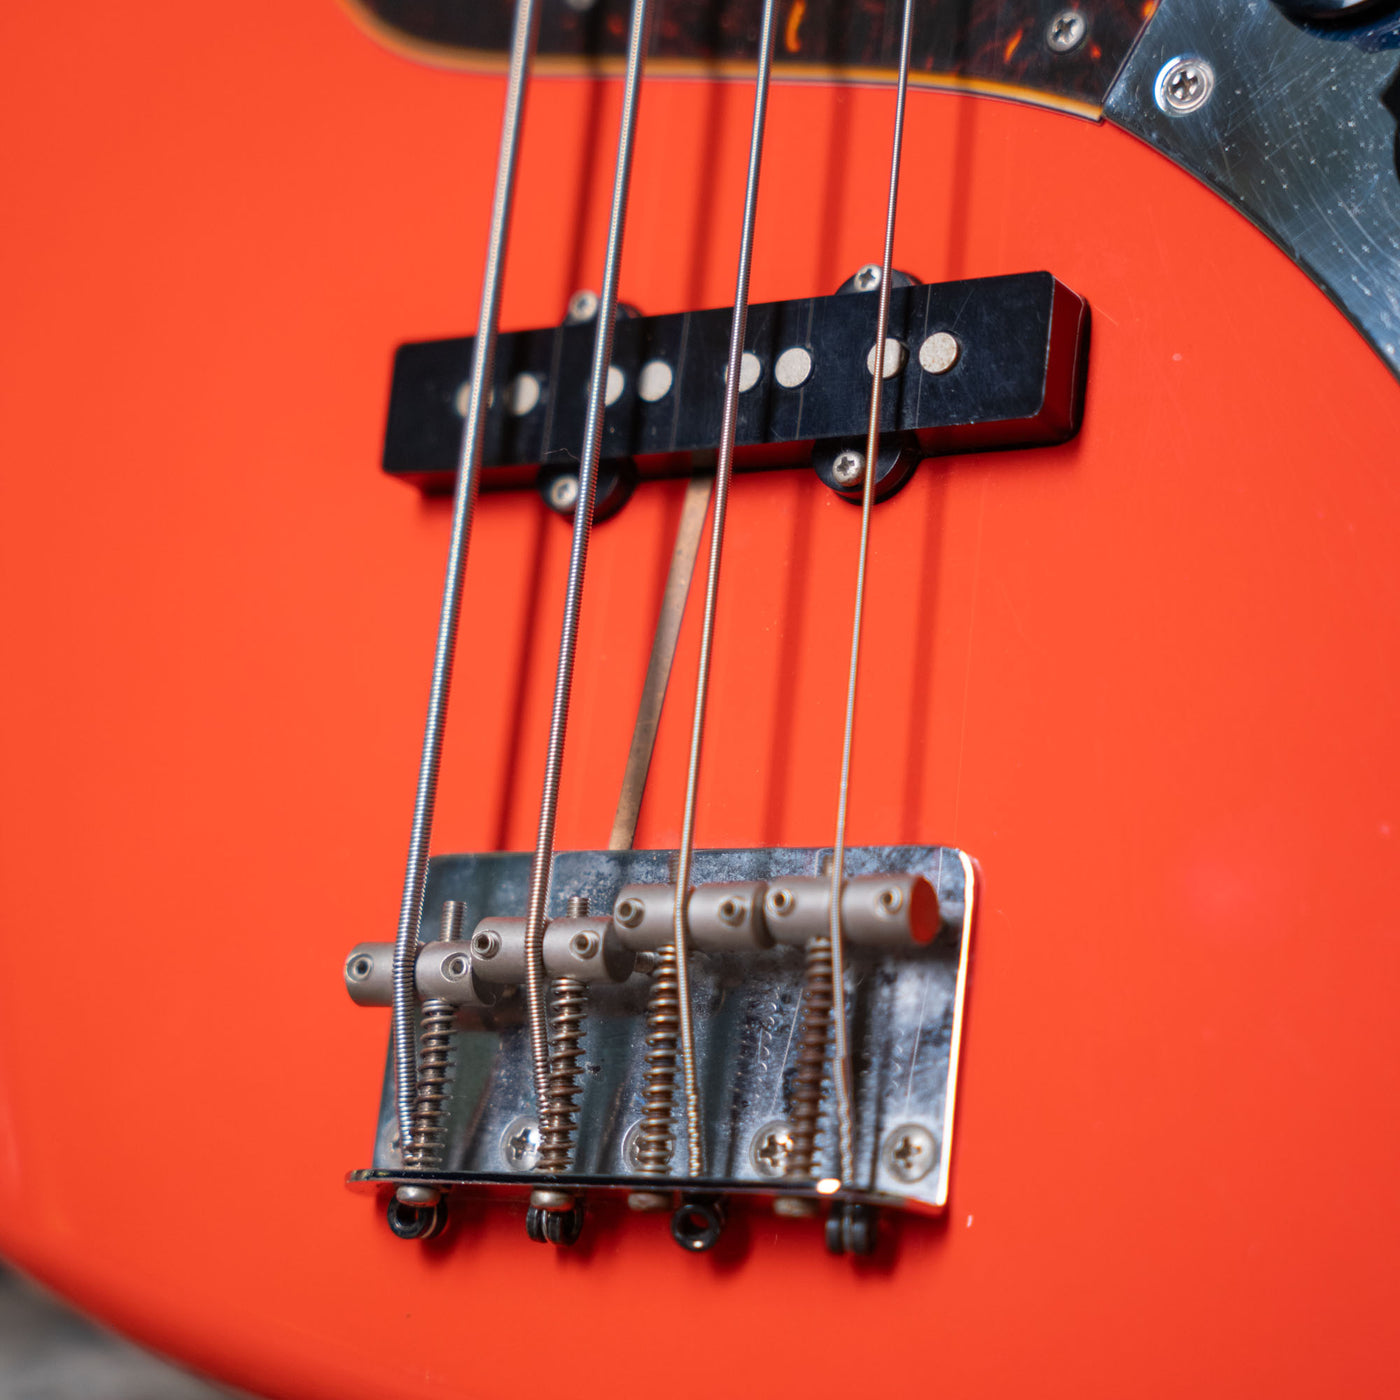 Fender Jazz Bass RI'62 Fiesta Red MIJ 2004